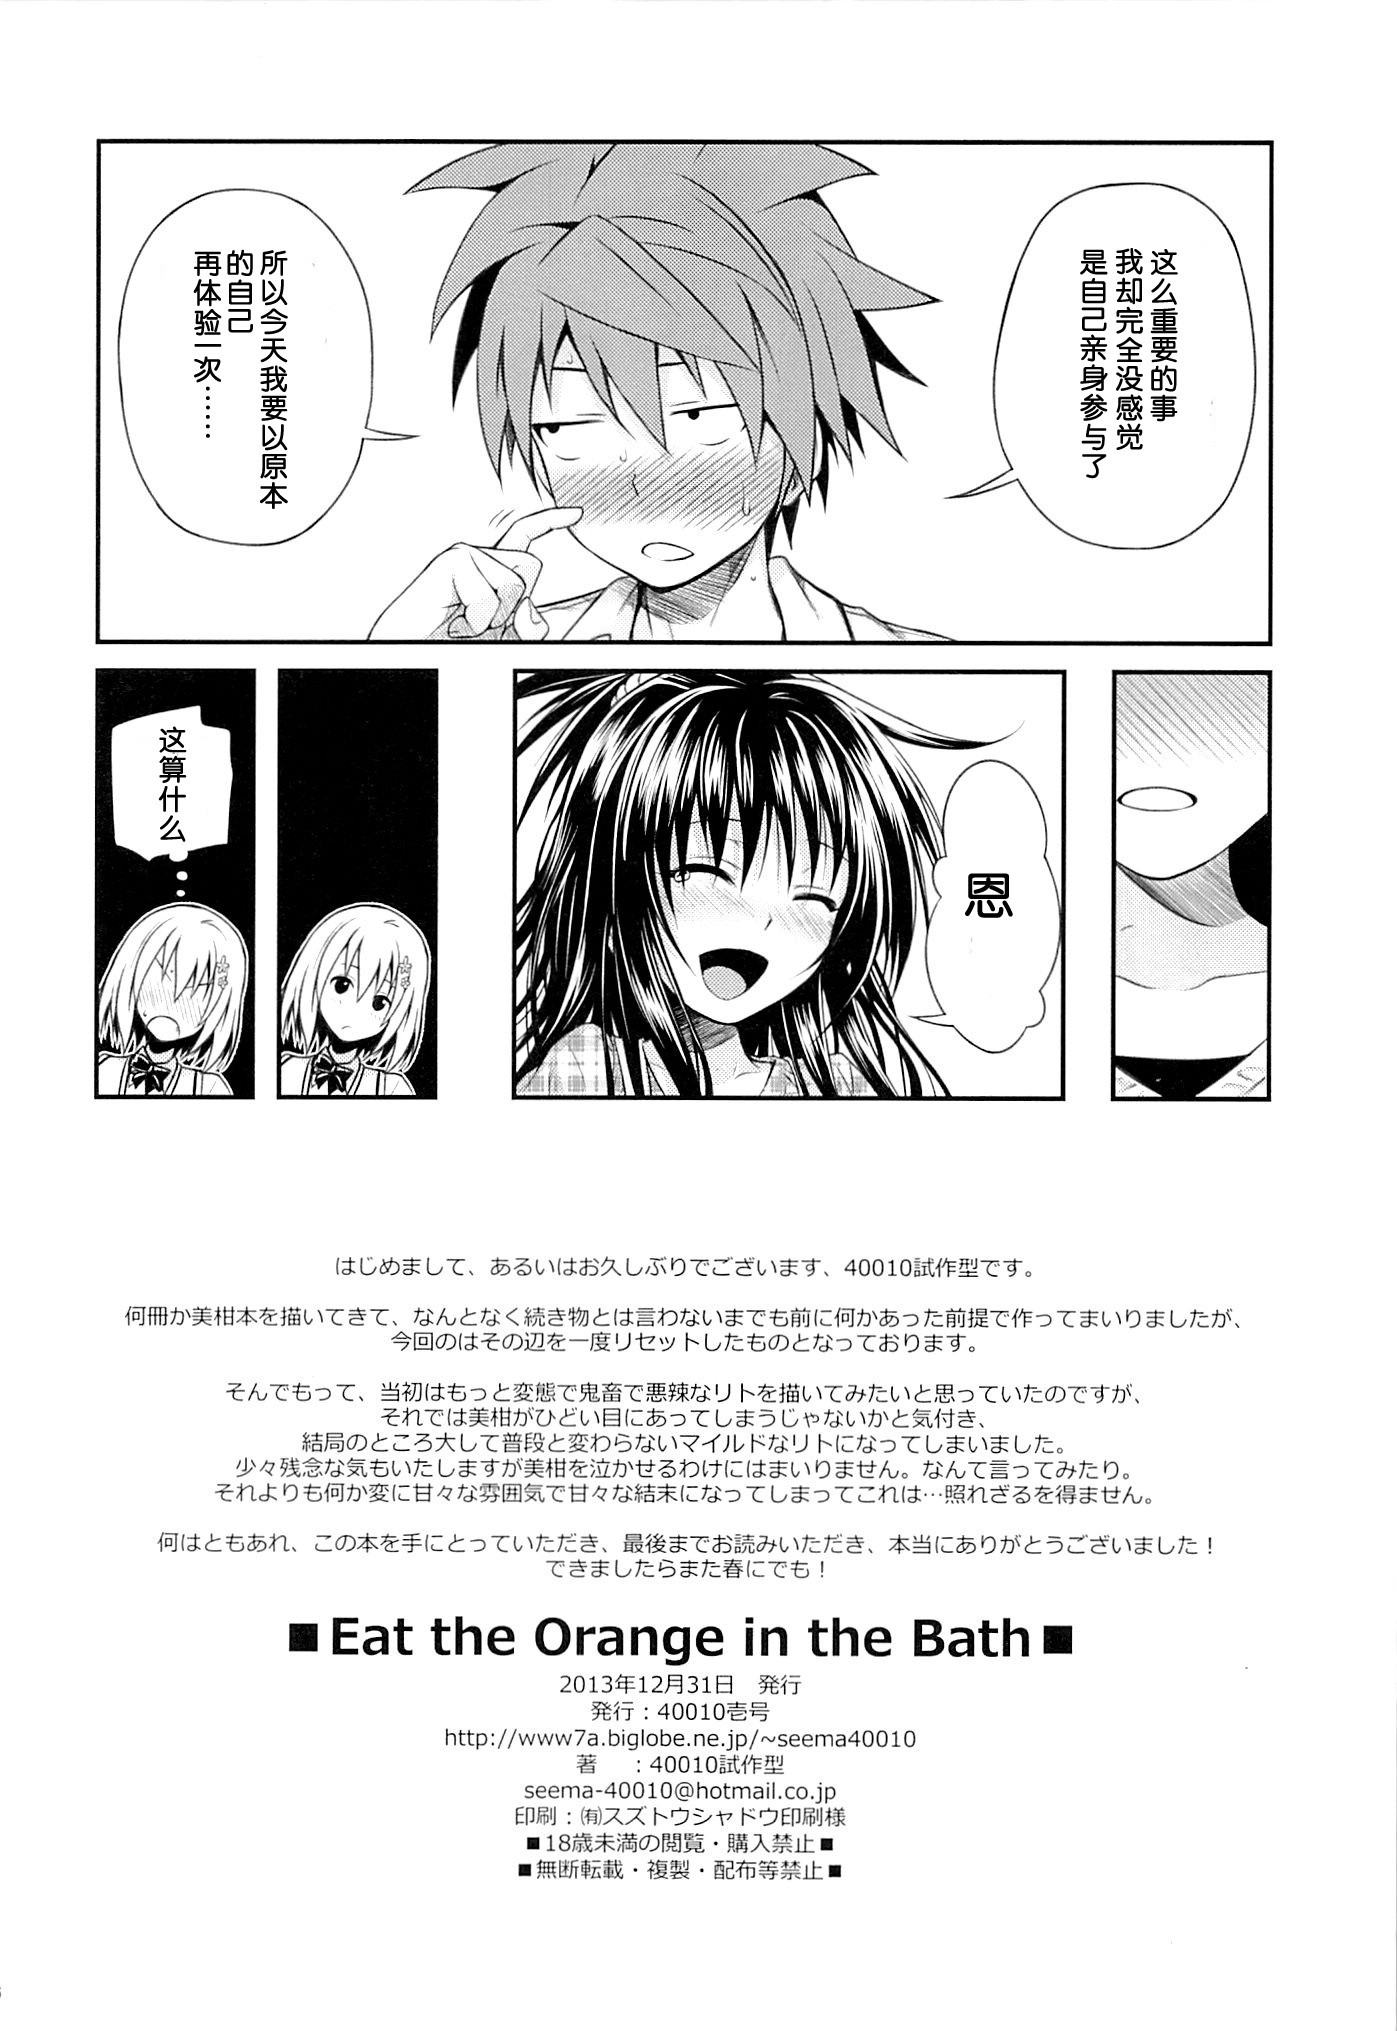 Eat the Orange in the Bath hentai manga picture 24